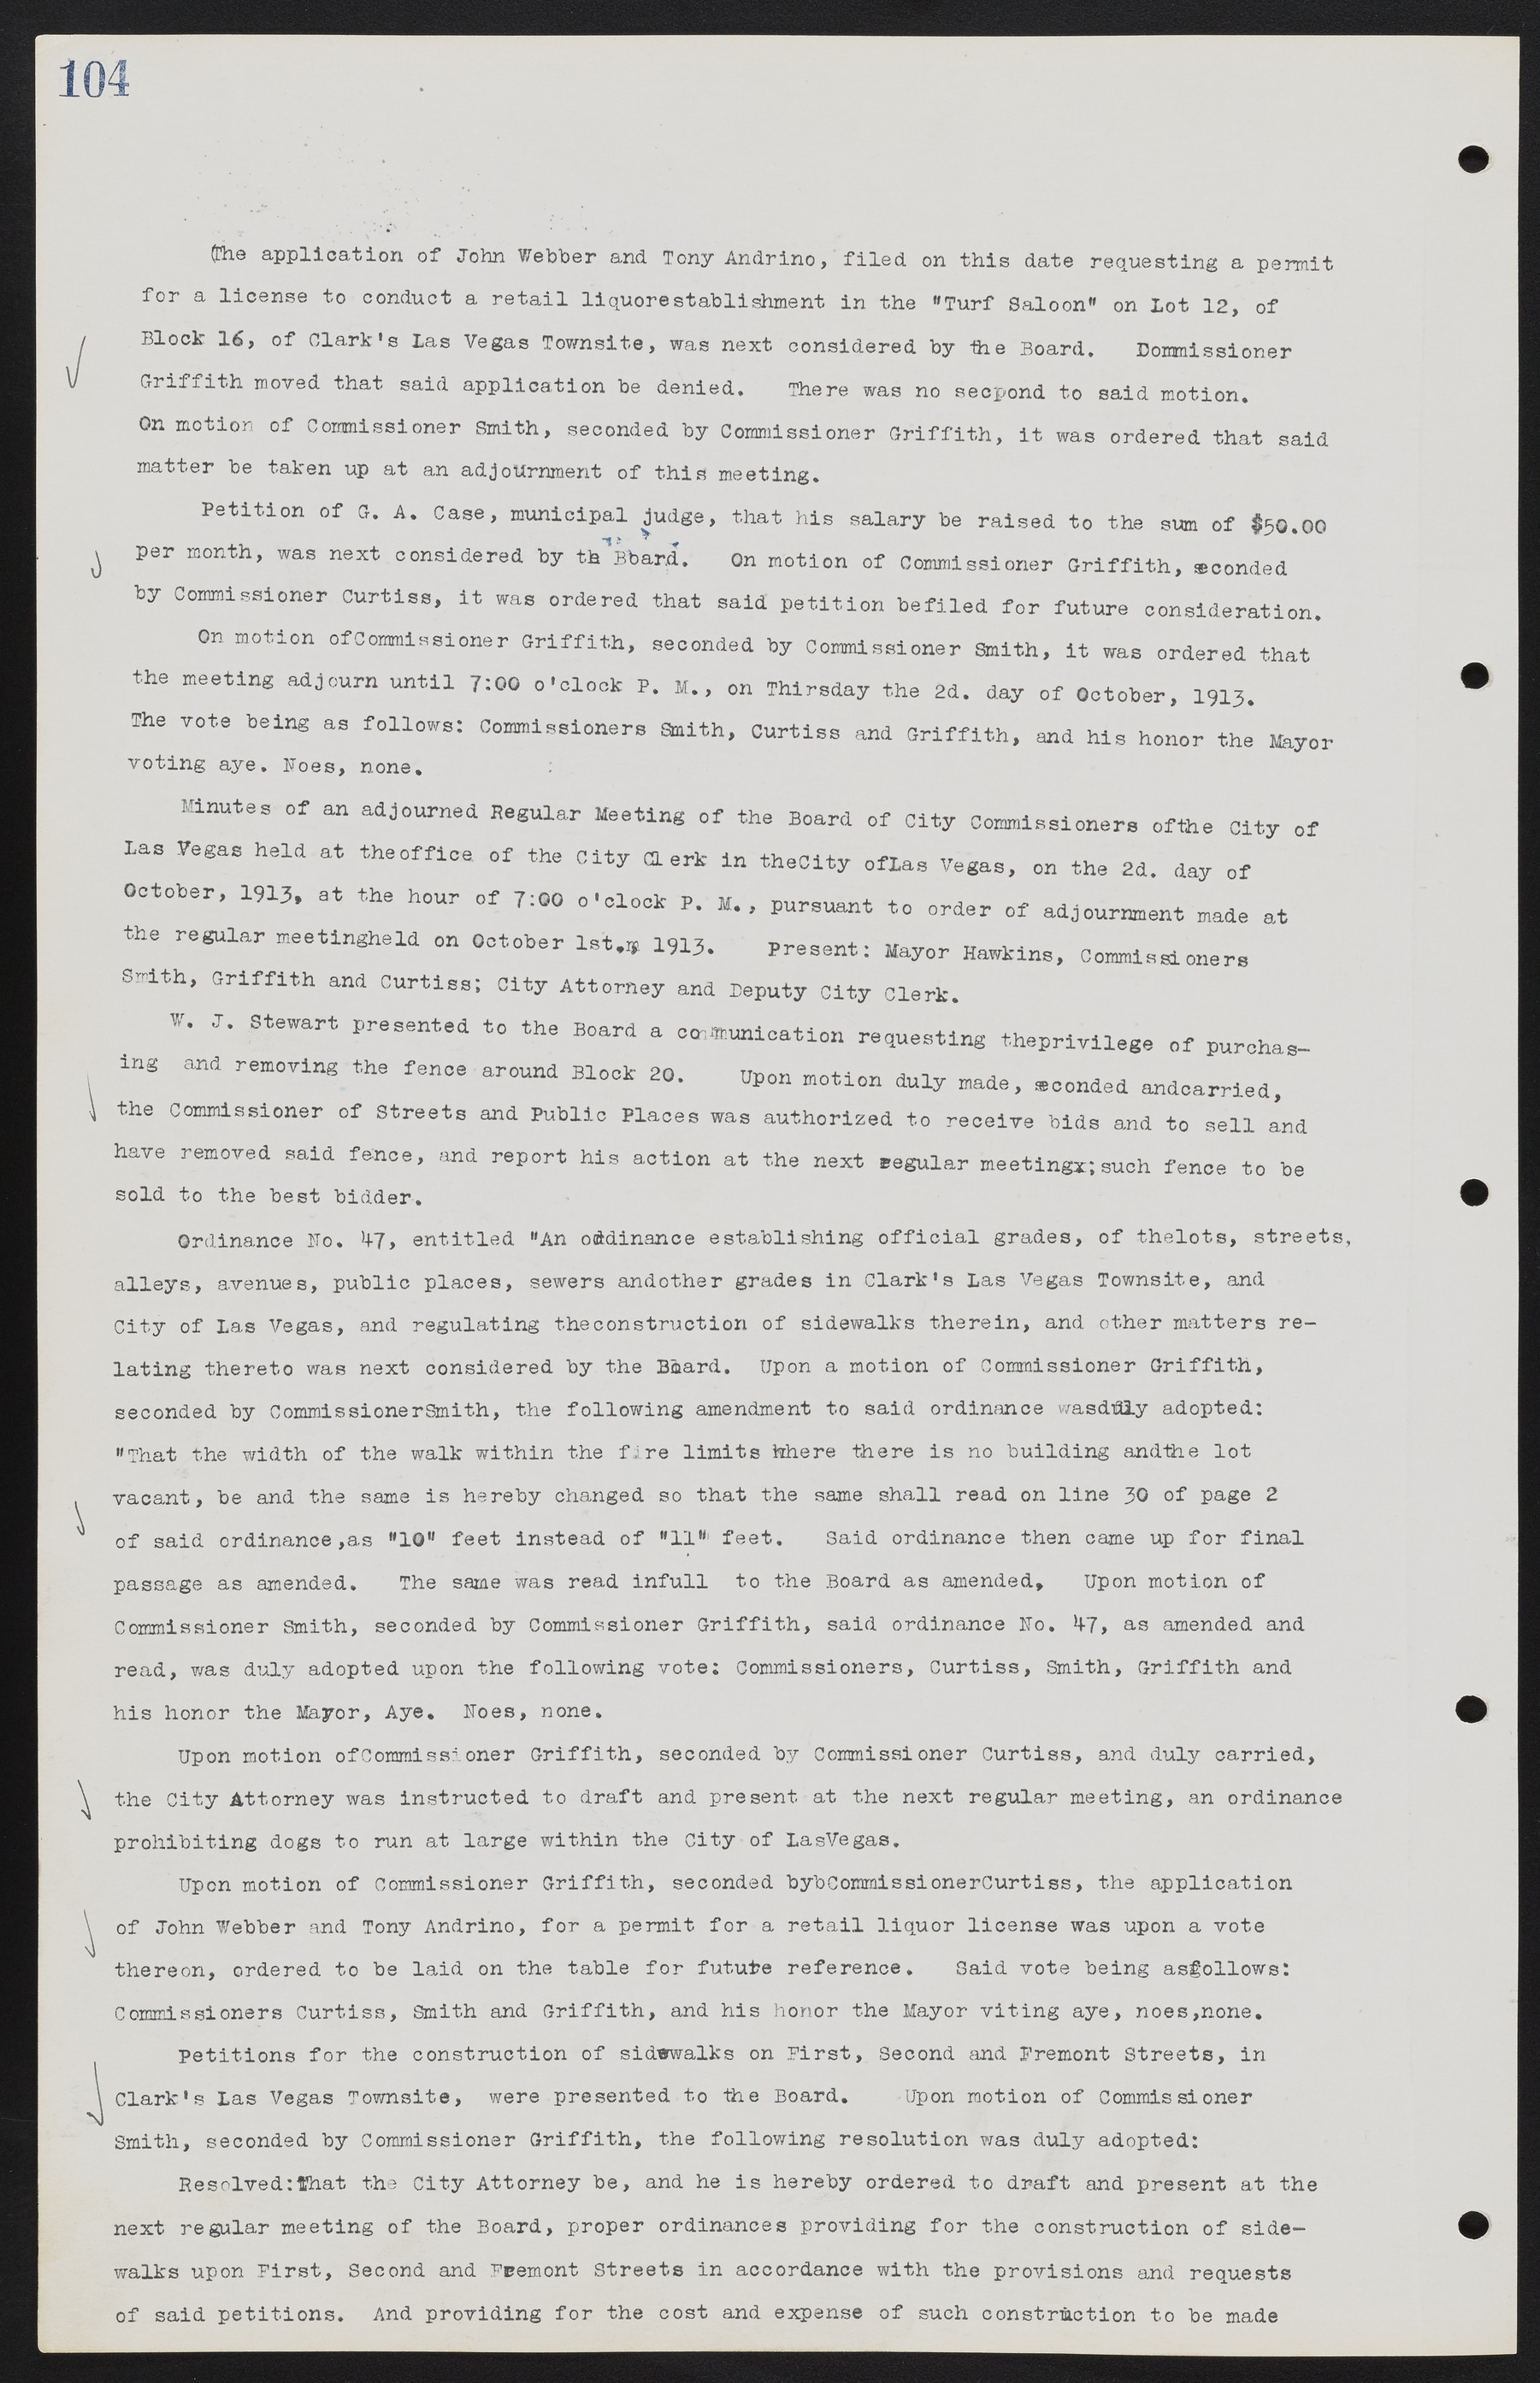 Las Vegas City Commission Minutes, June 22, 1911 to February 7, 1922, lvc000001-118